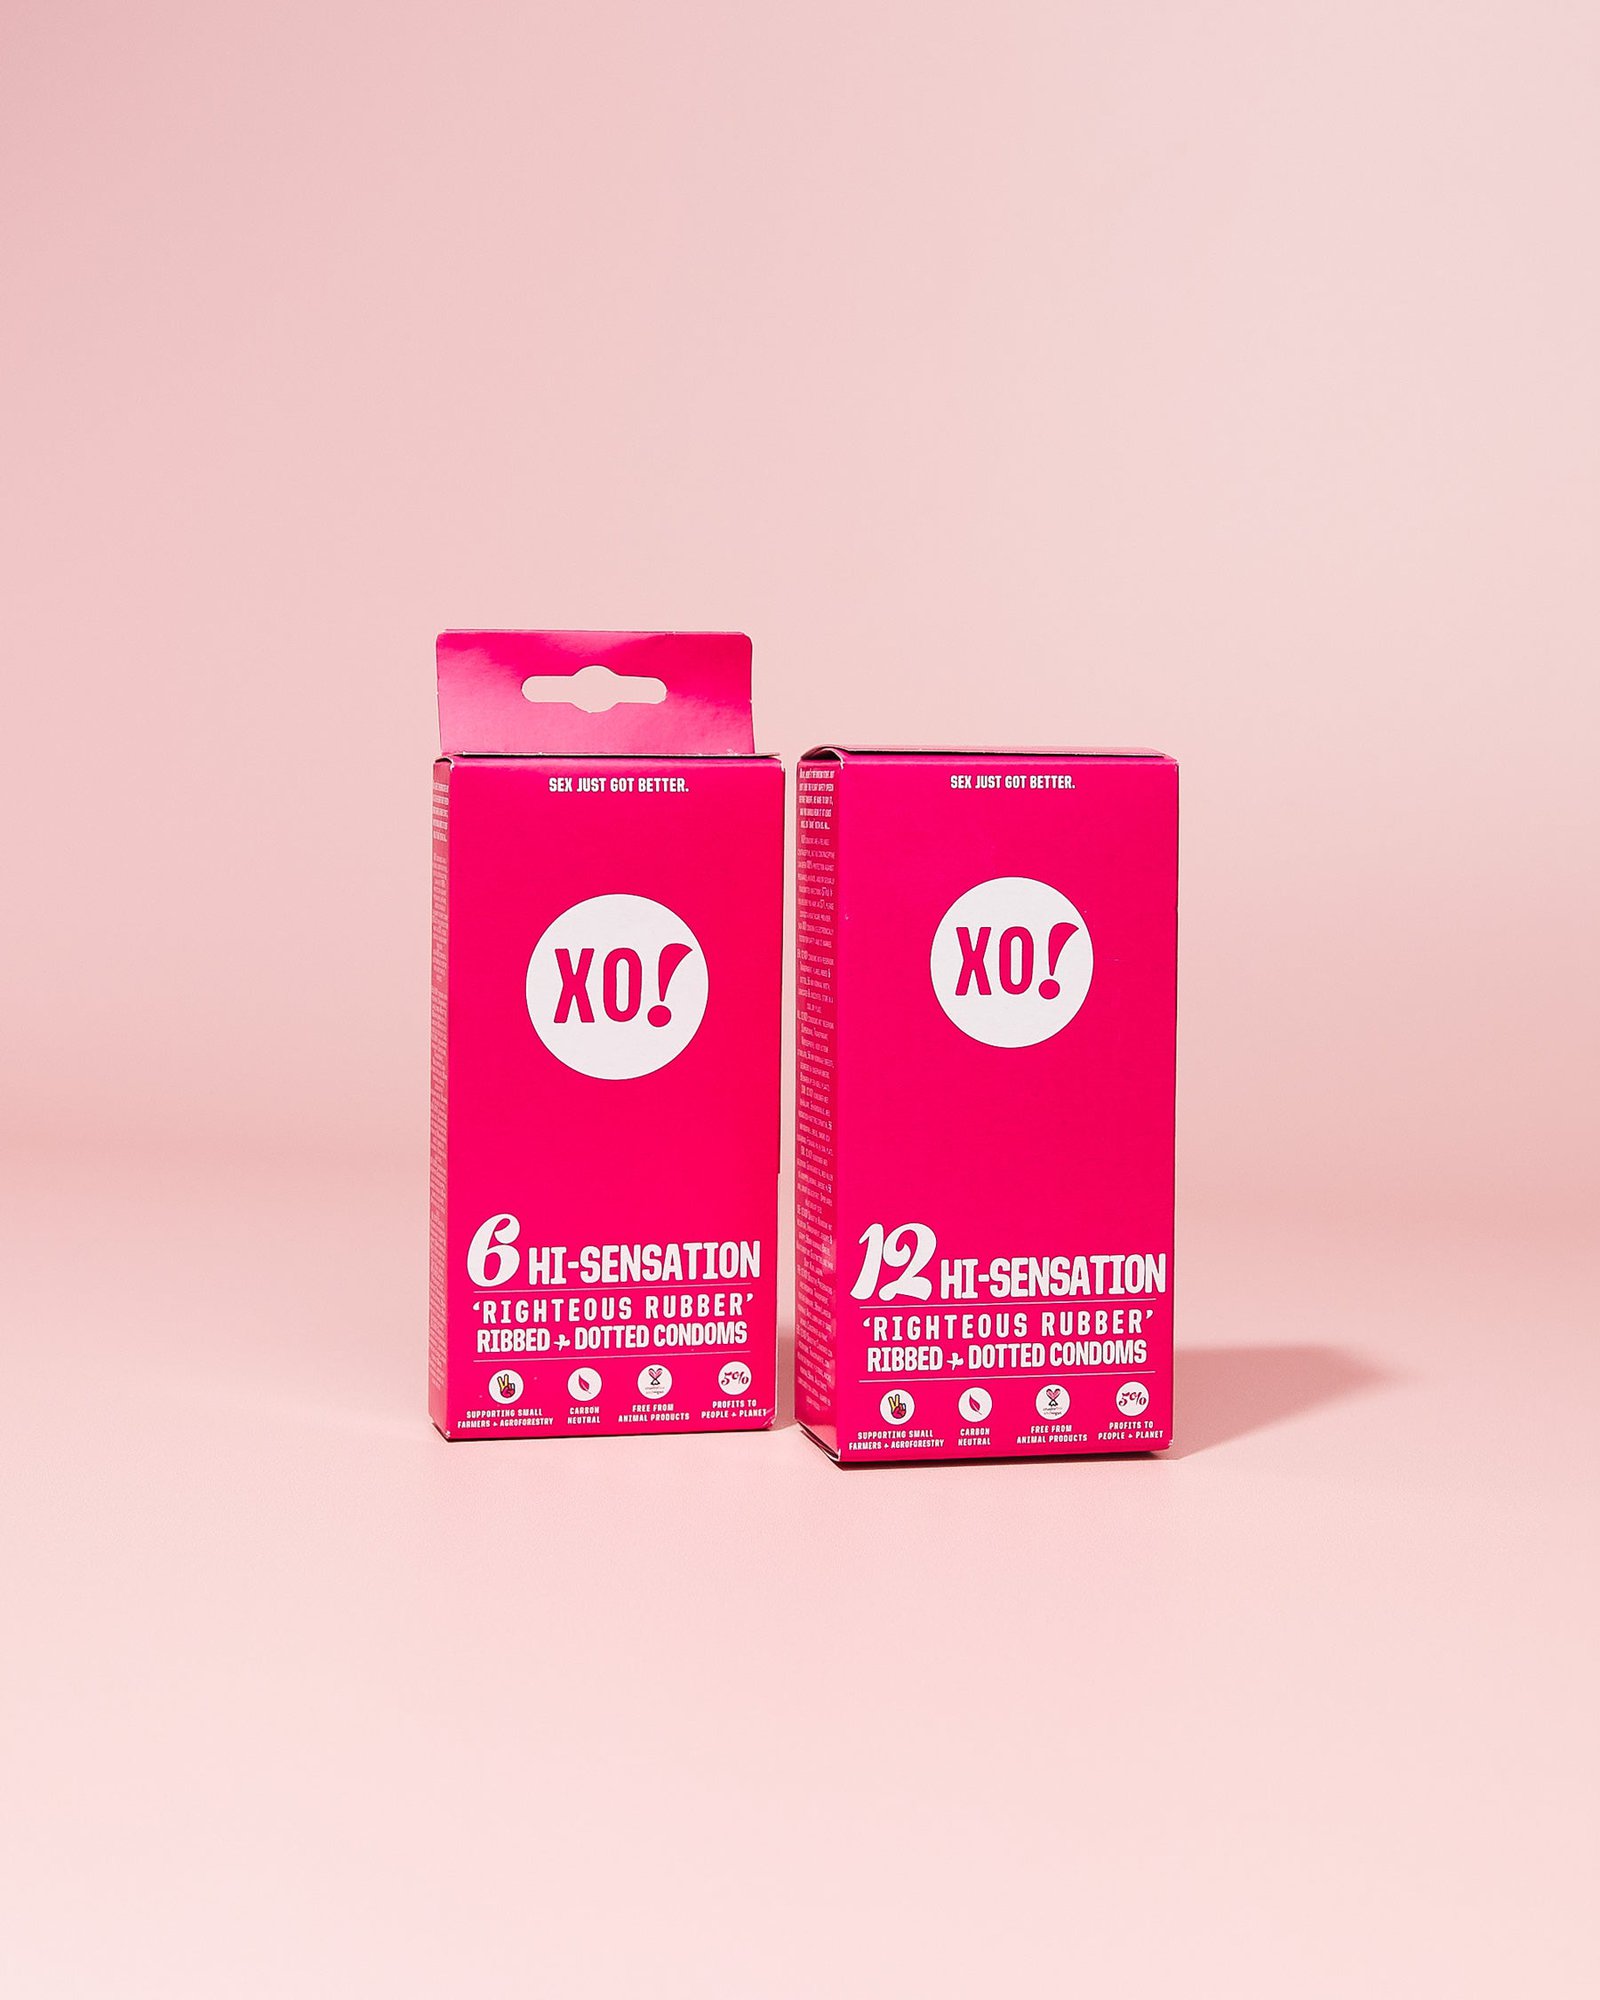 Xo! Hi-sensation Vegan Condoms